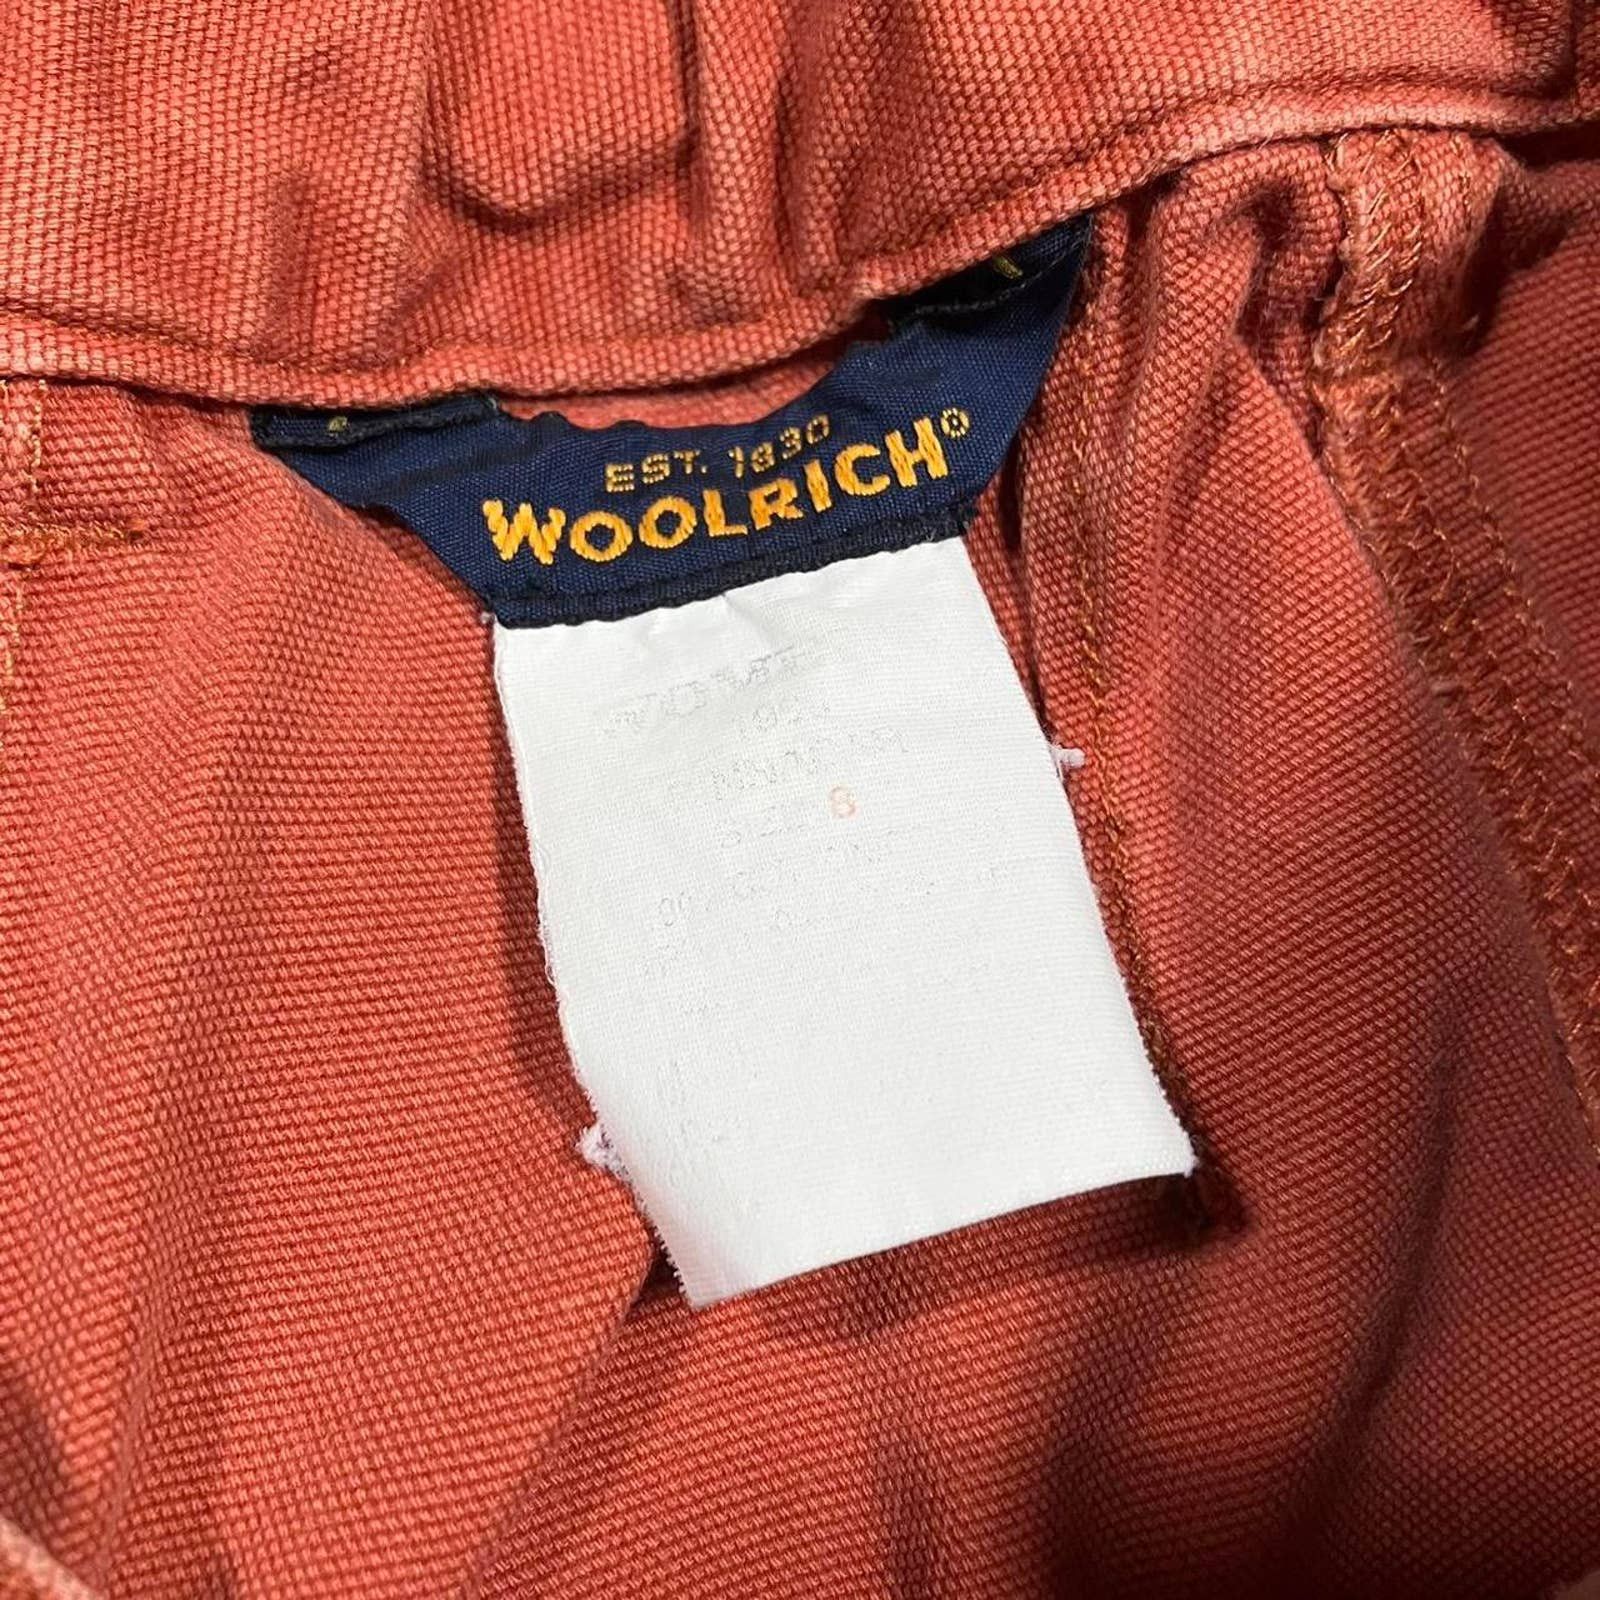 Woolrich Woolen Mills Woolrich Red Orange Canvas Cargo Shorts Size 30" / US 8 / IT 44 - 4 Thumbnail